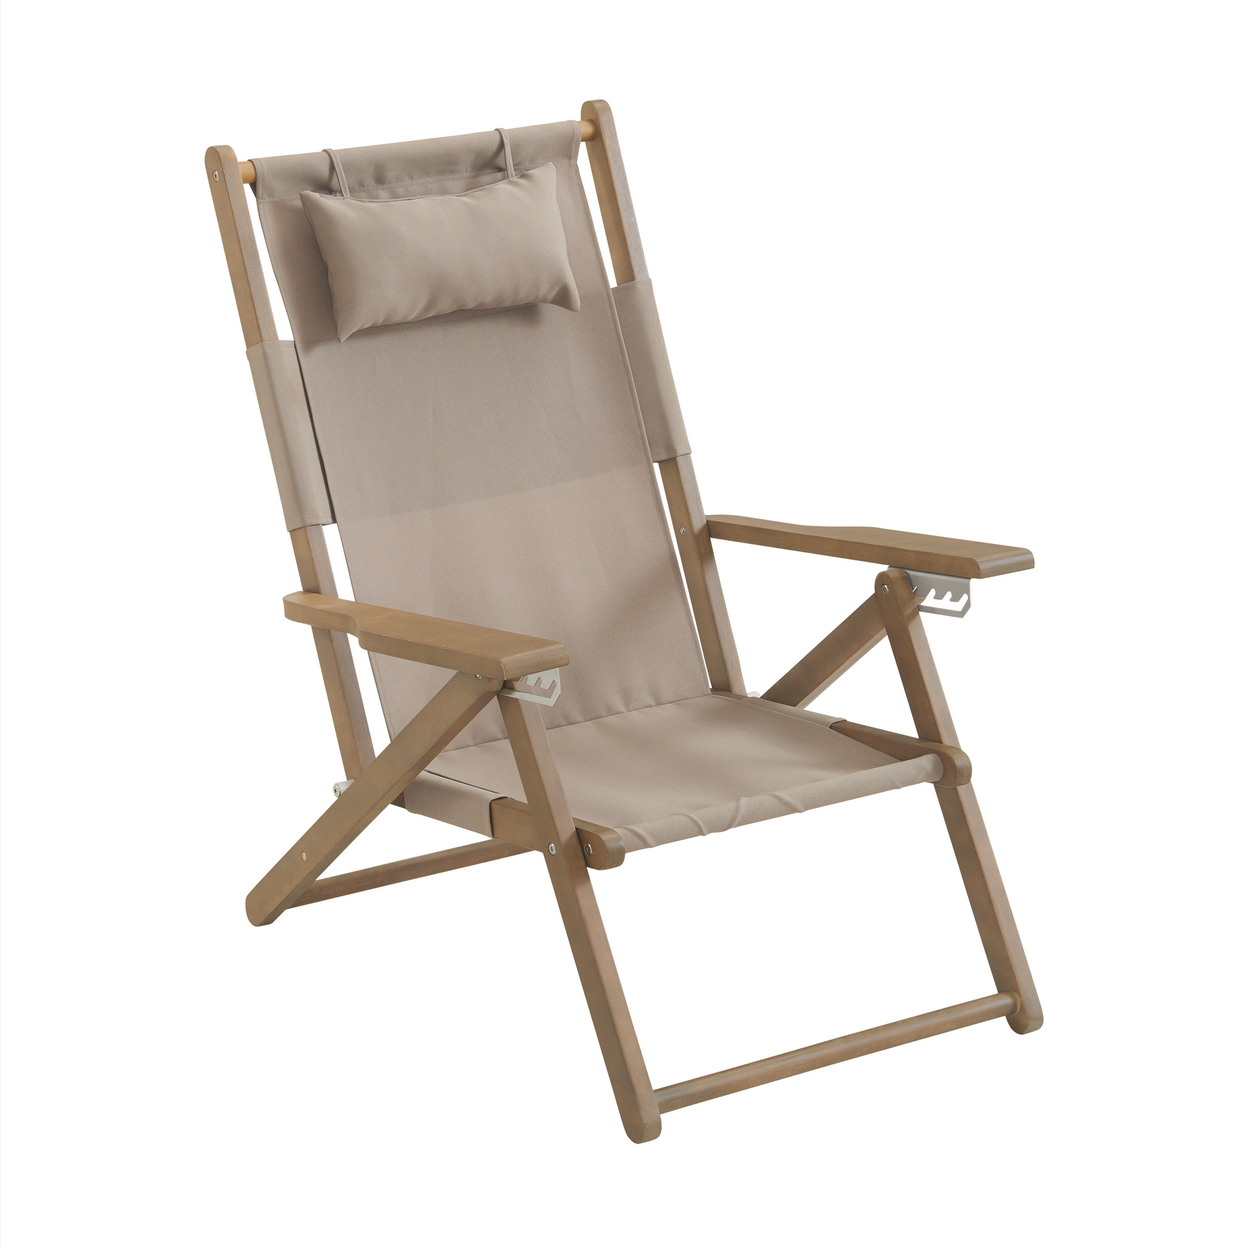 Wood Beach Chair Folding Backpack Straps, 4-Position Recline Beach Essentials